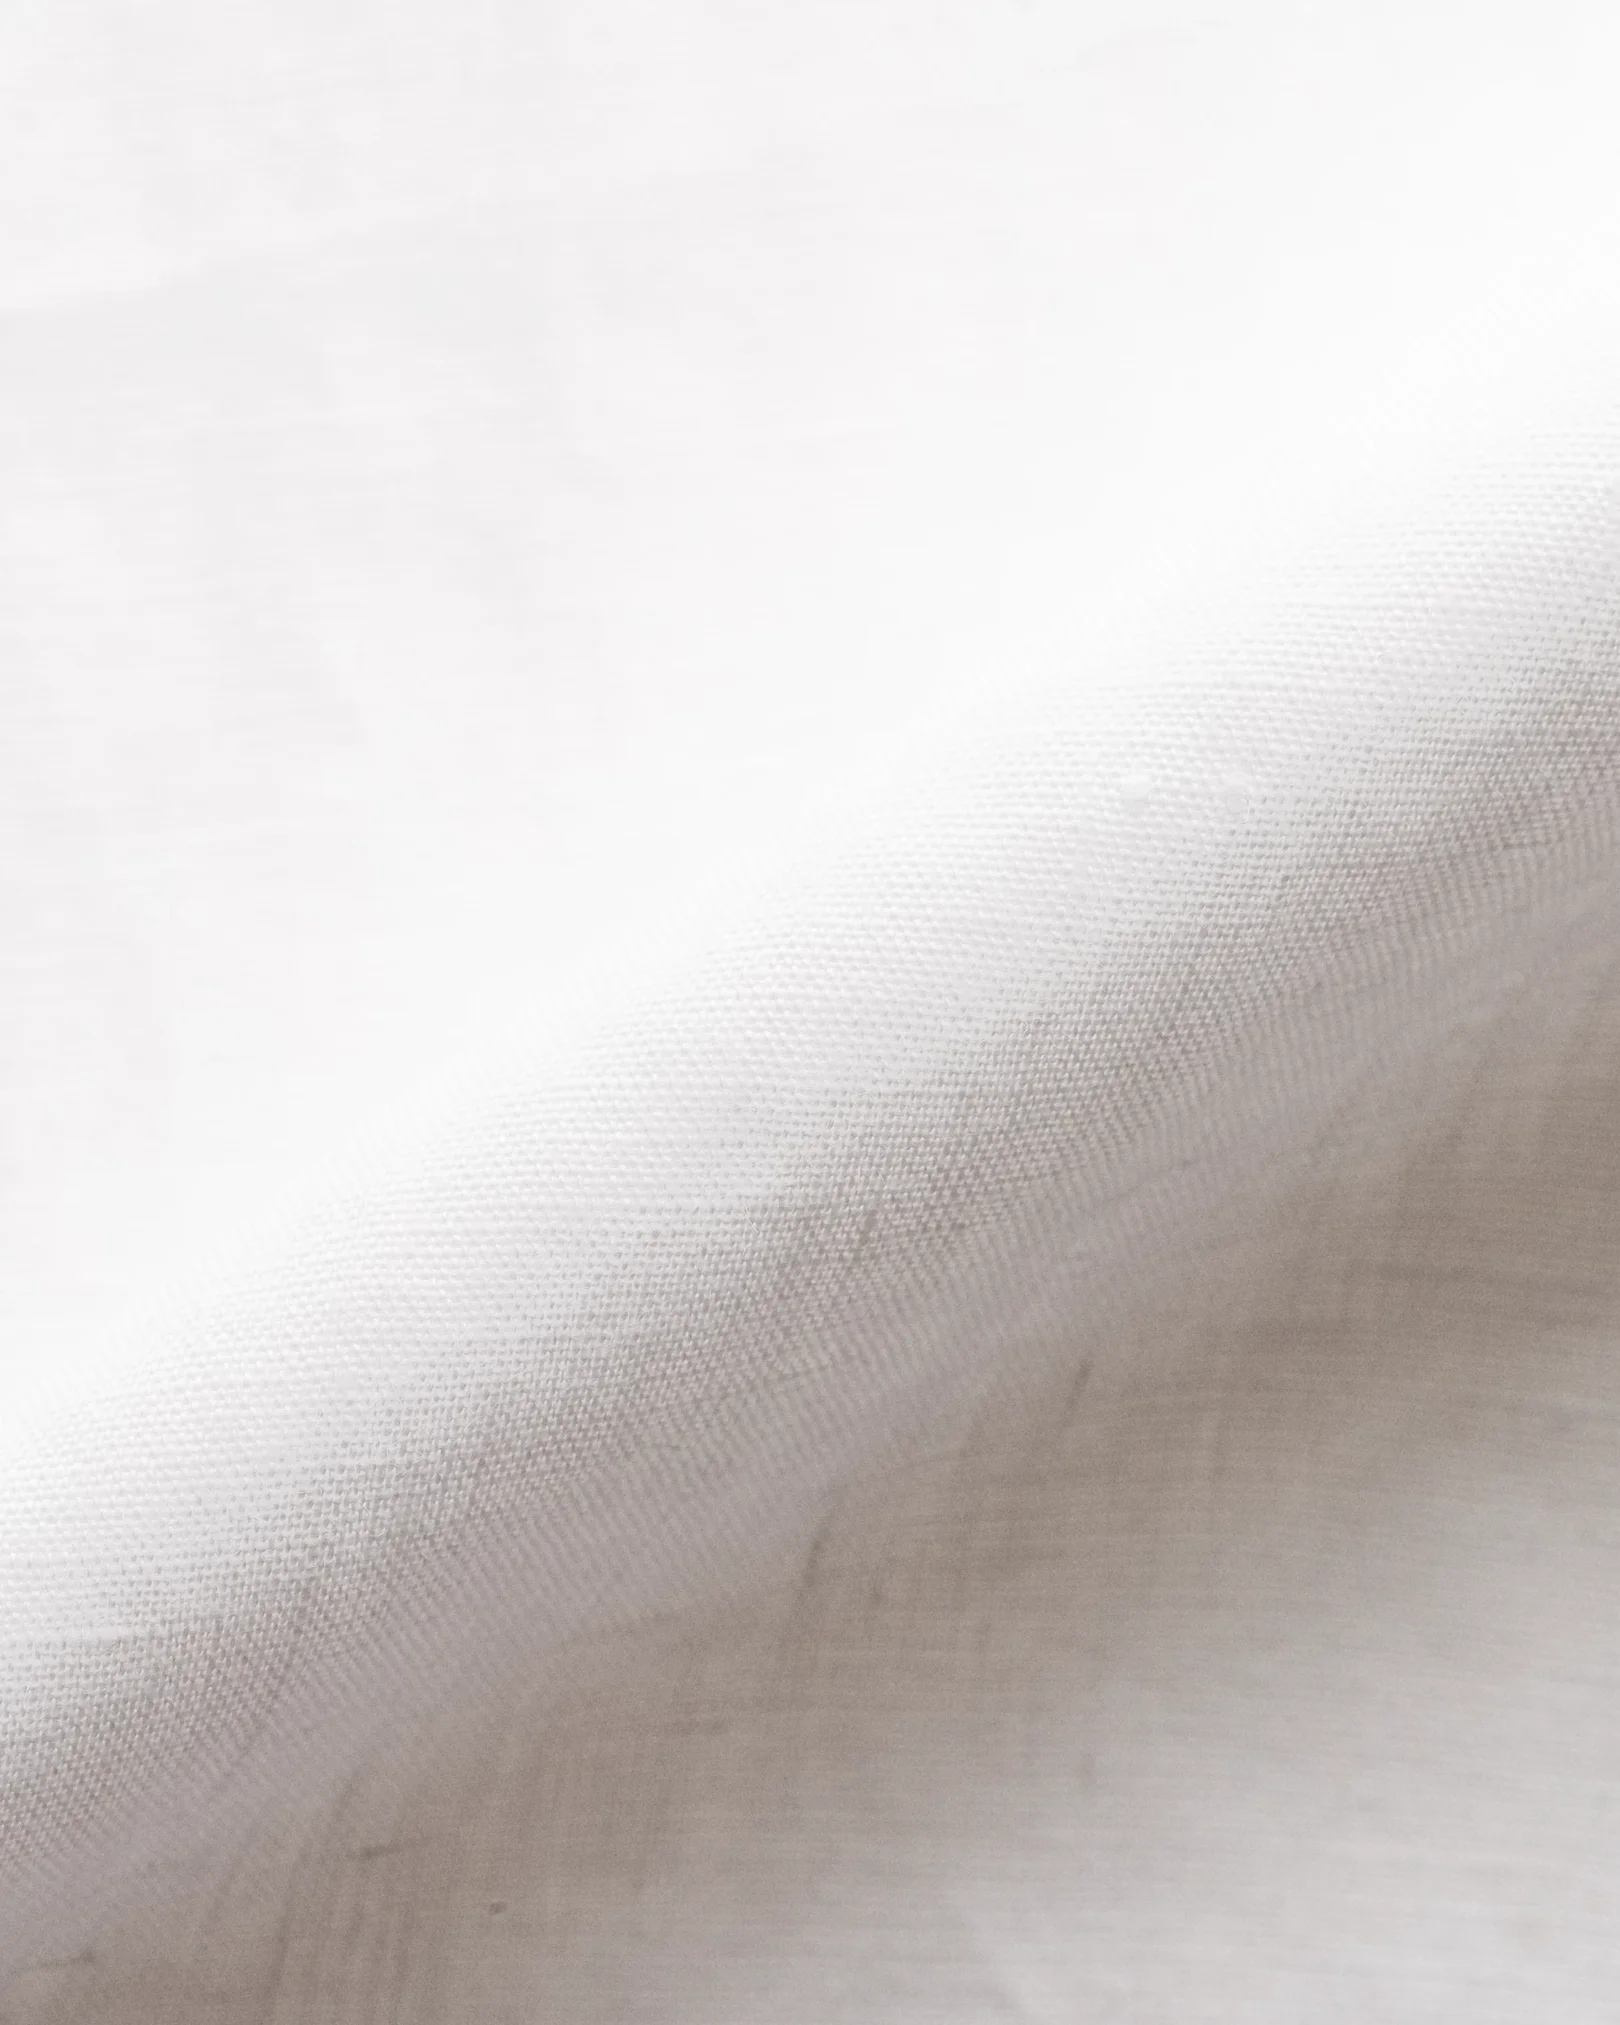 Eton - white linen button down soft